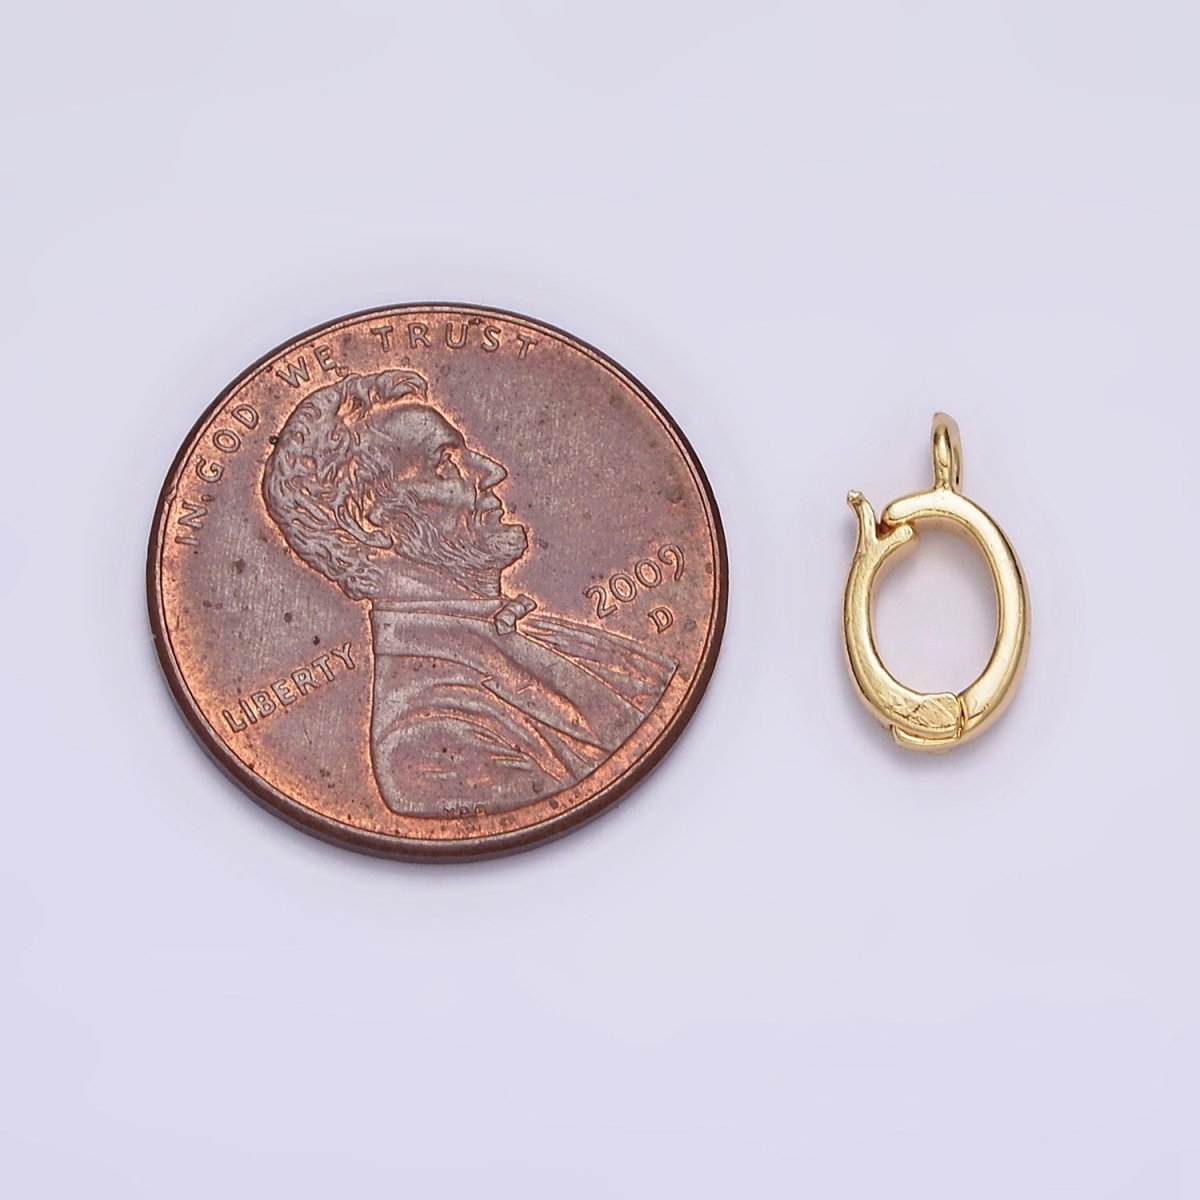 24K Gold Filled Heart Oval Open Loop Interchangeable Charm Holder Jewelry Making Supply | Z-443 - DLUXCA